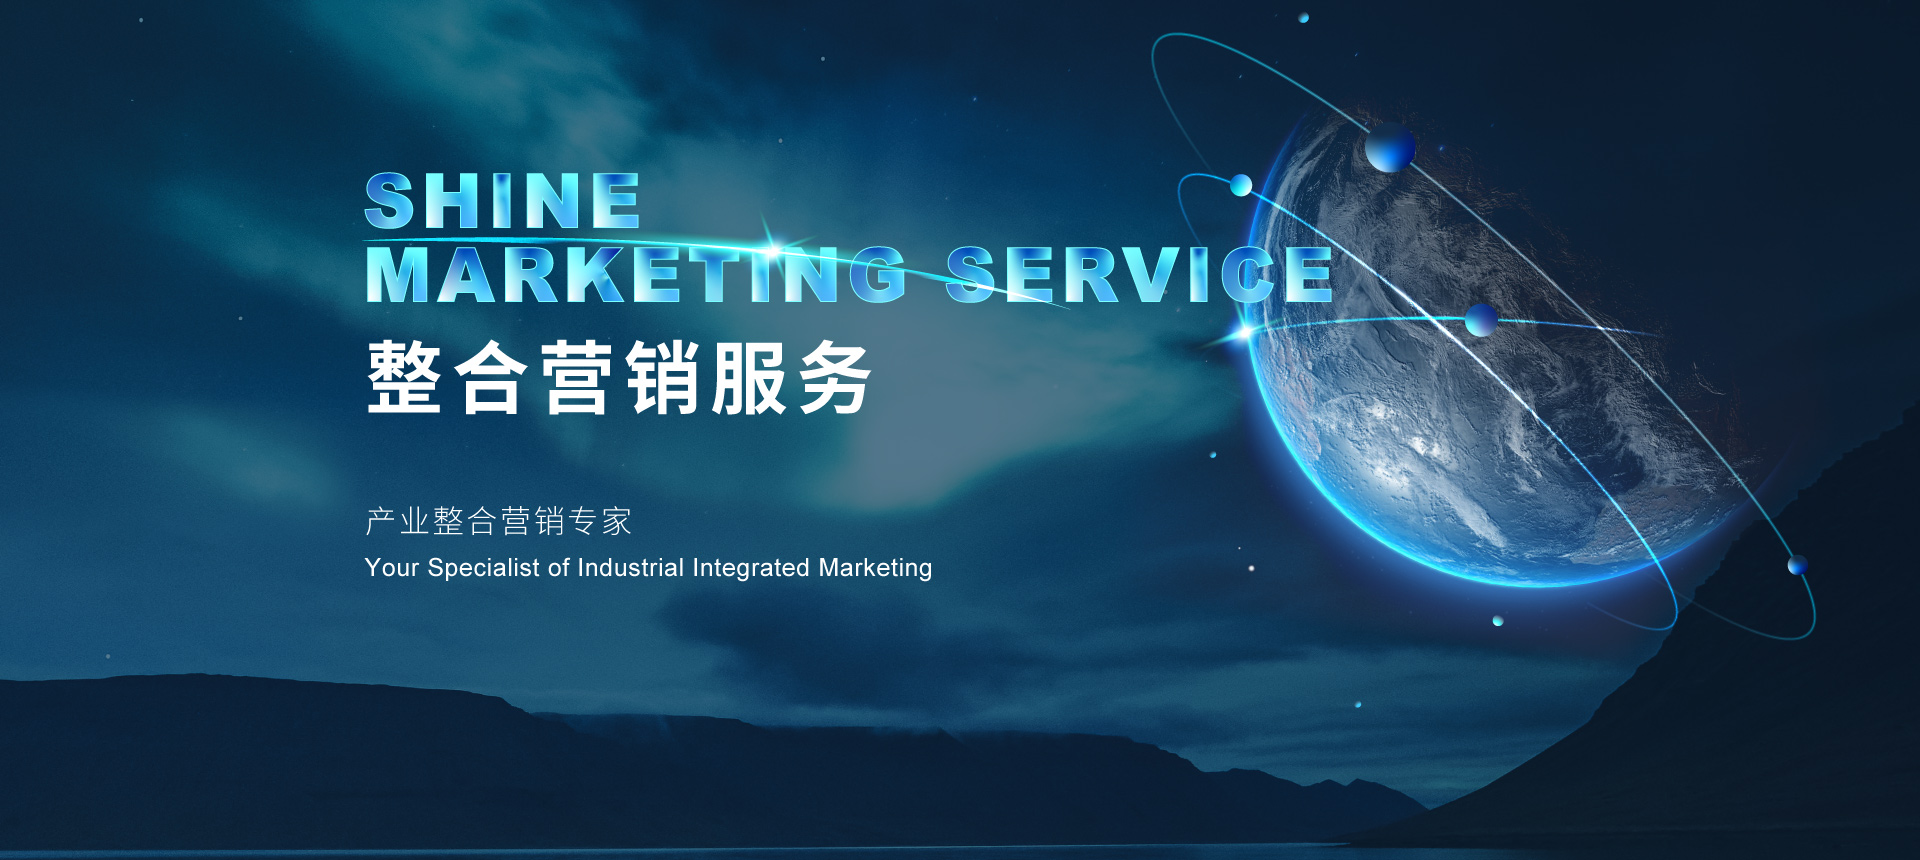 Shine Marketing Service